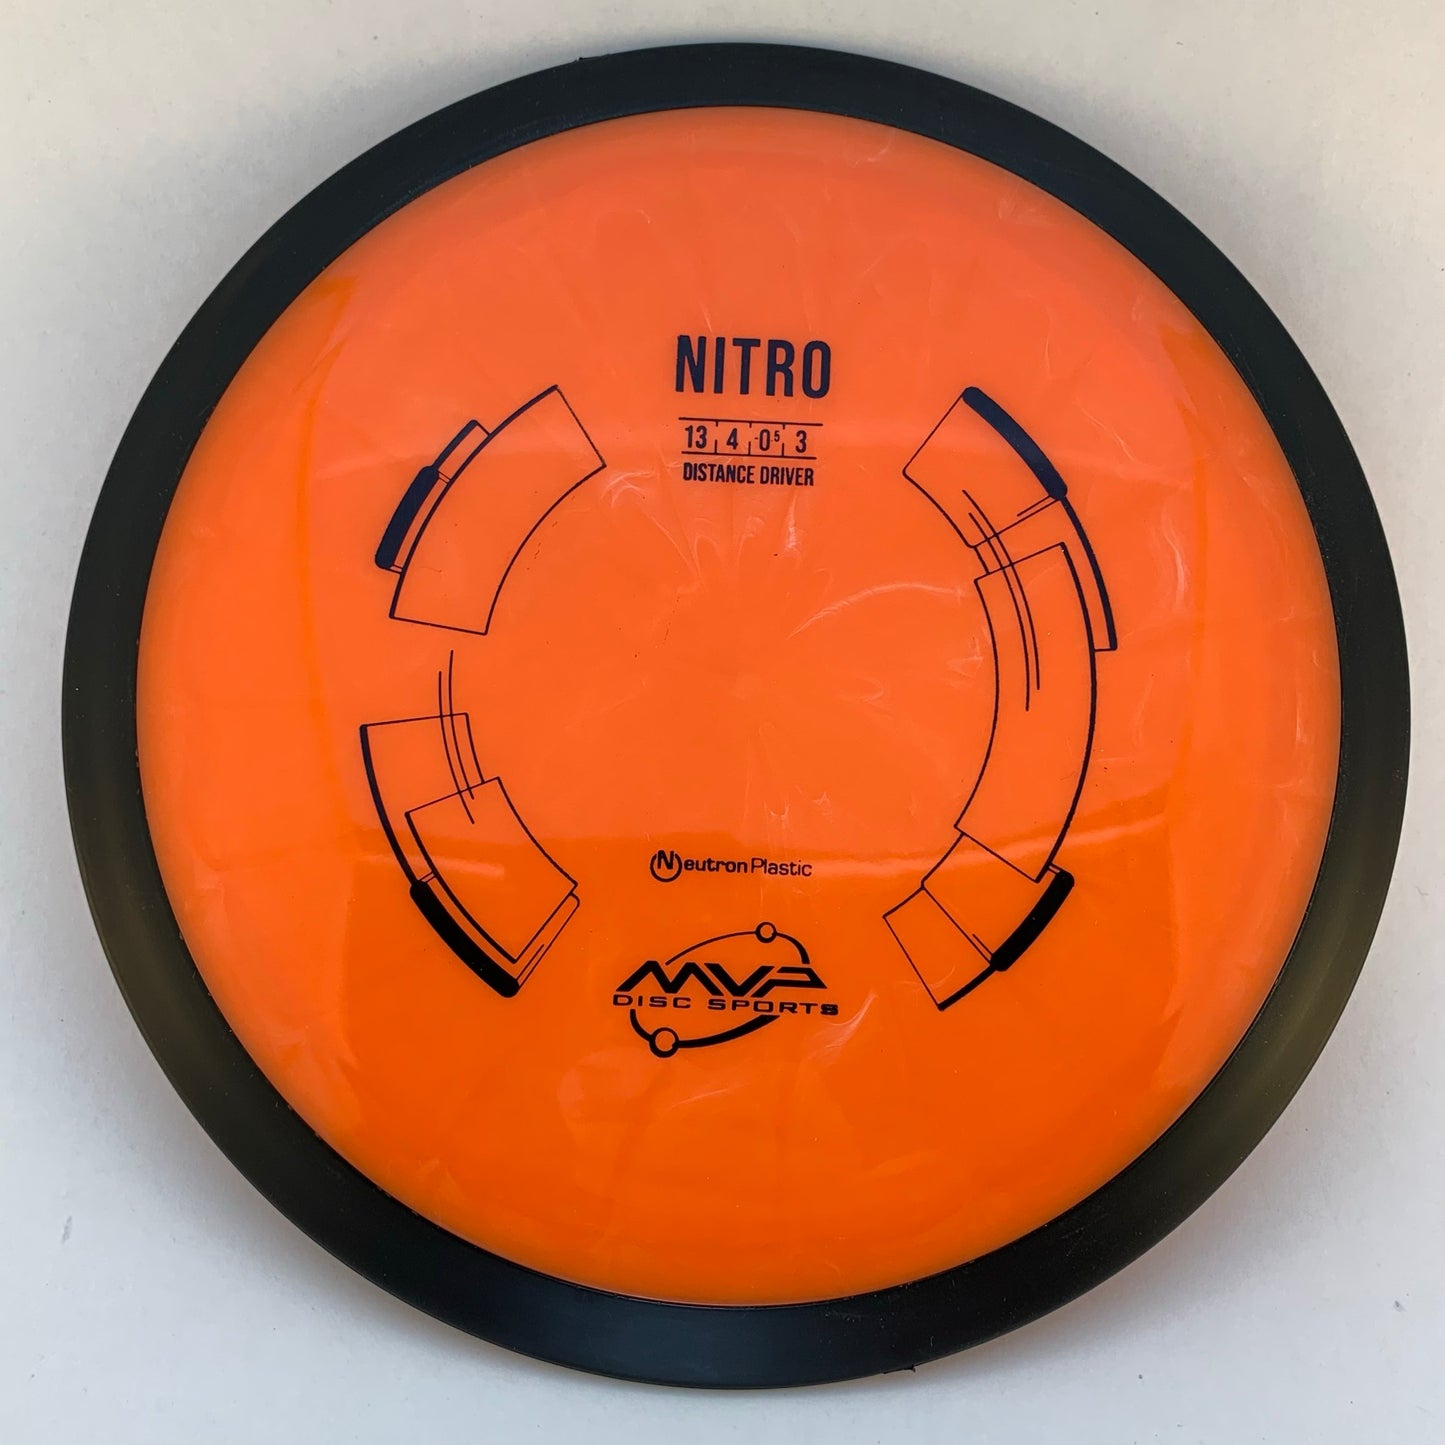 MVP Disc Sports : Nitro (Neutron plastic)